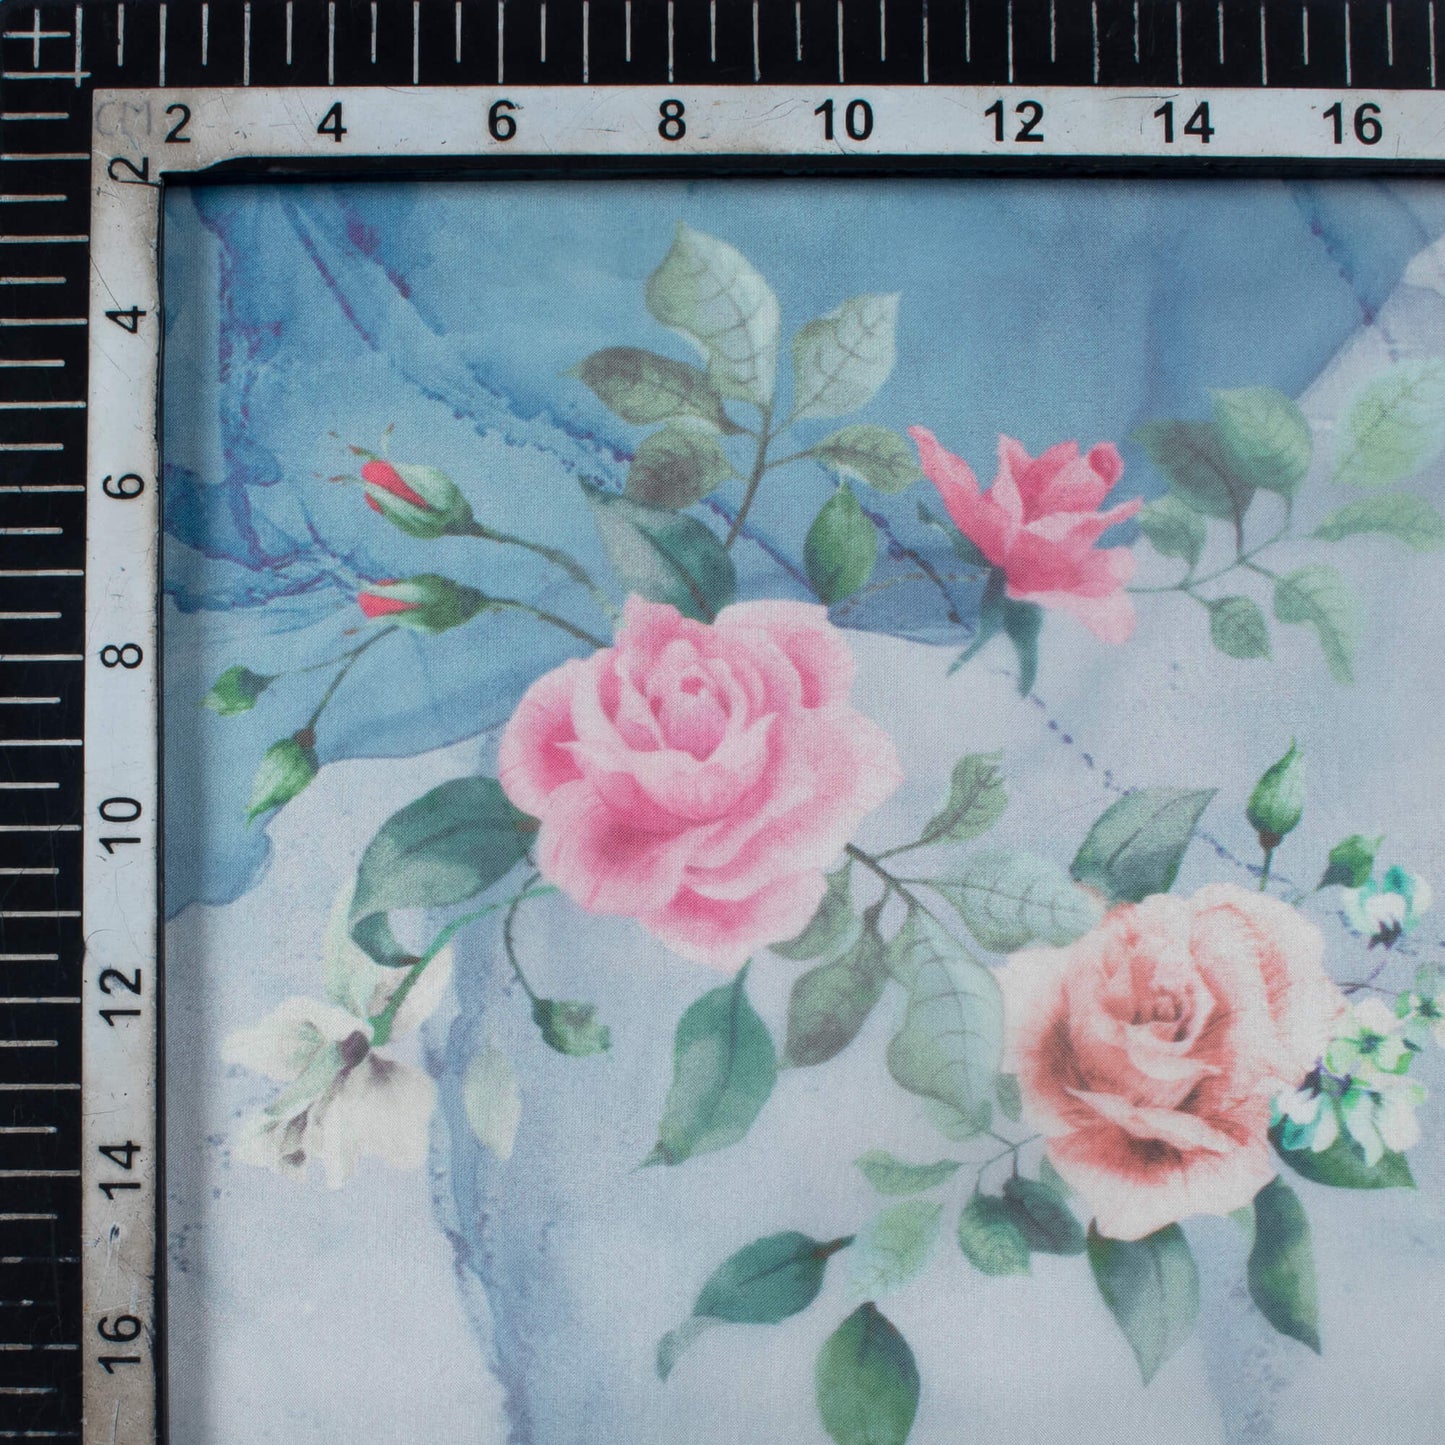 Carolina Blue And Pink Marble Pattern Digital Print Premium Organza Fabric - Fabcurate